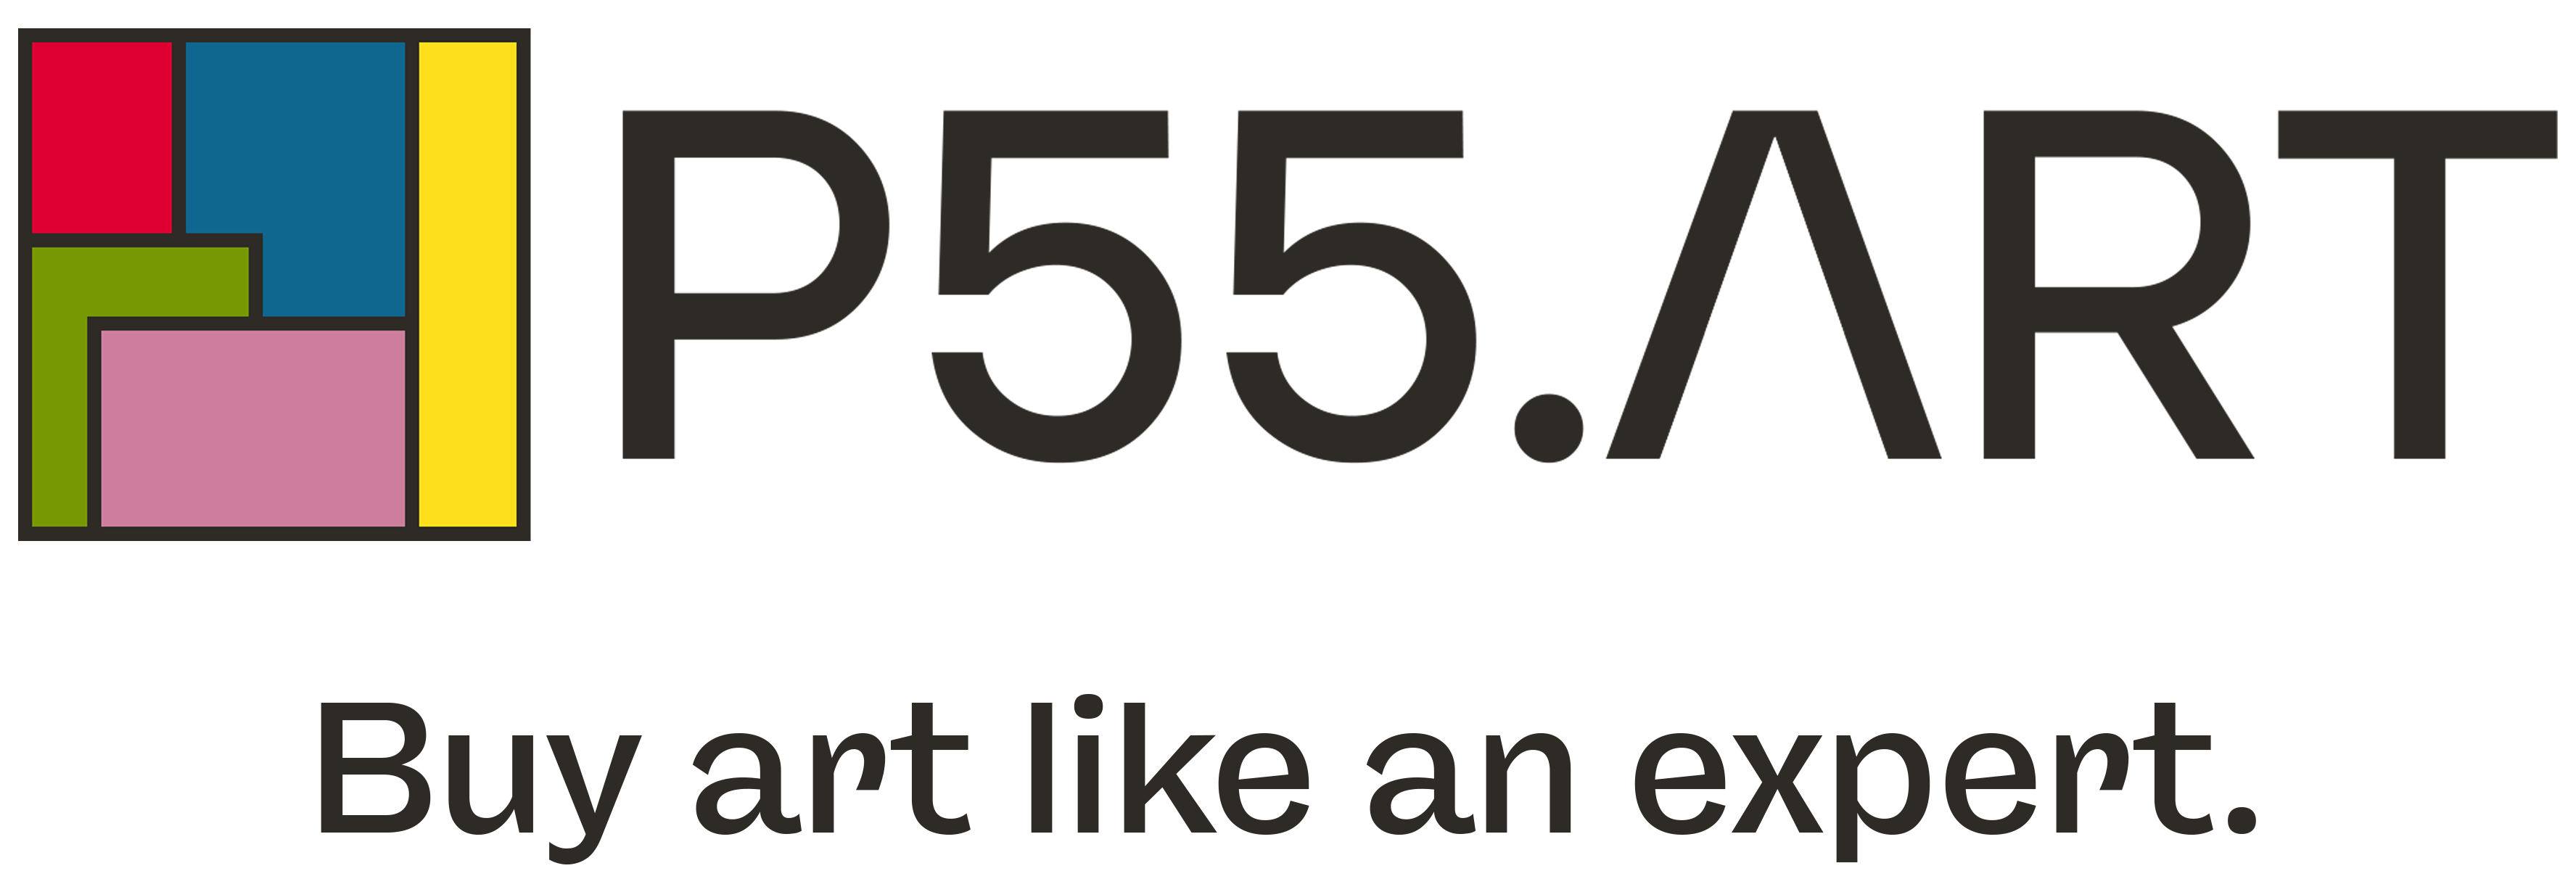 P55.ART logo